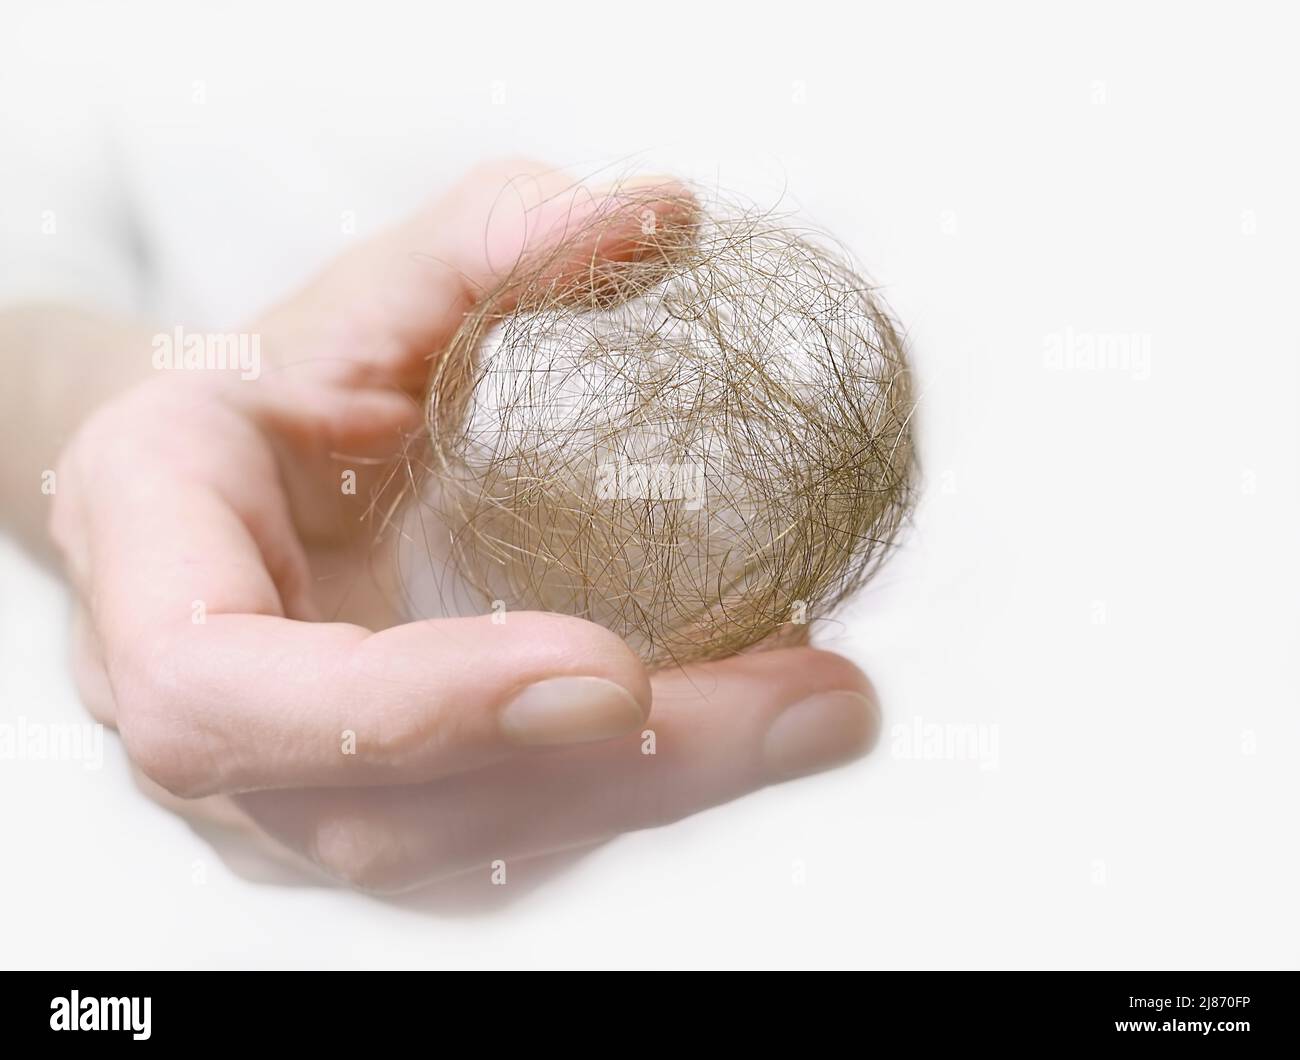 Woman's hand holds a ball of blonde hair. Hair loss. Hair fall disease. Female pattern baldness or alopecia. Hair loss due to anxiety or coronavirus. Stock Photo